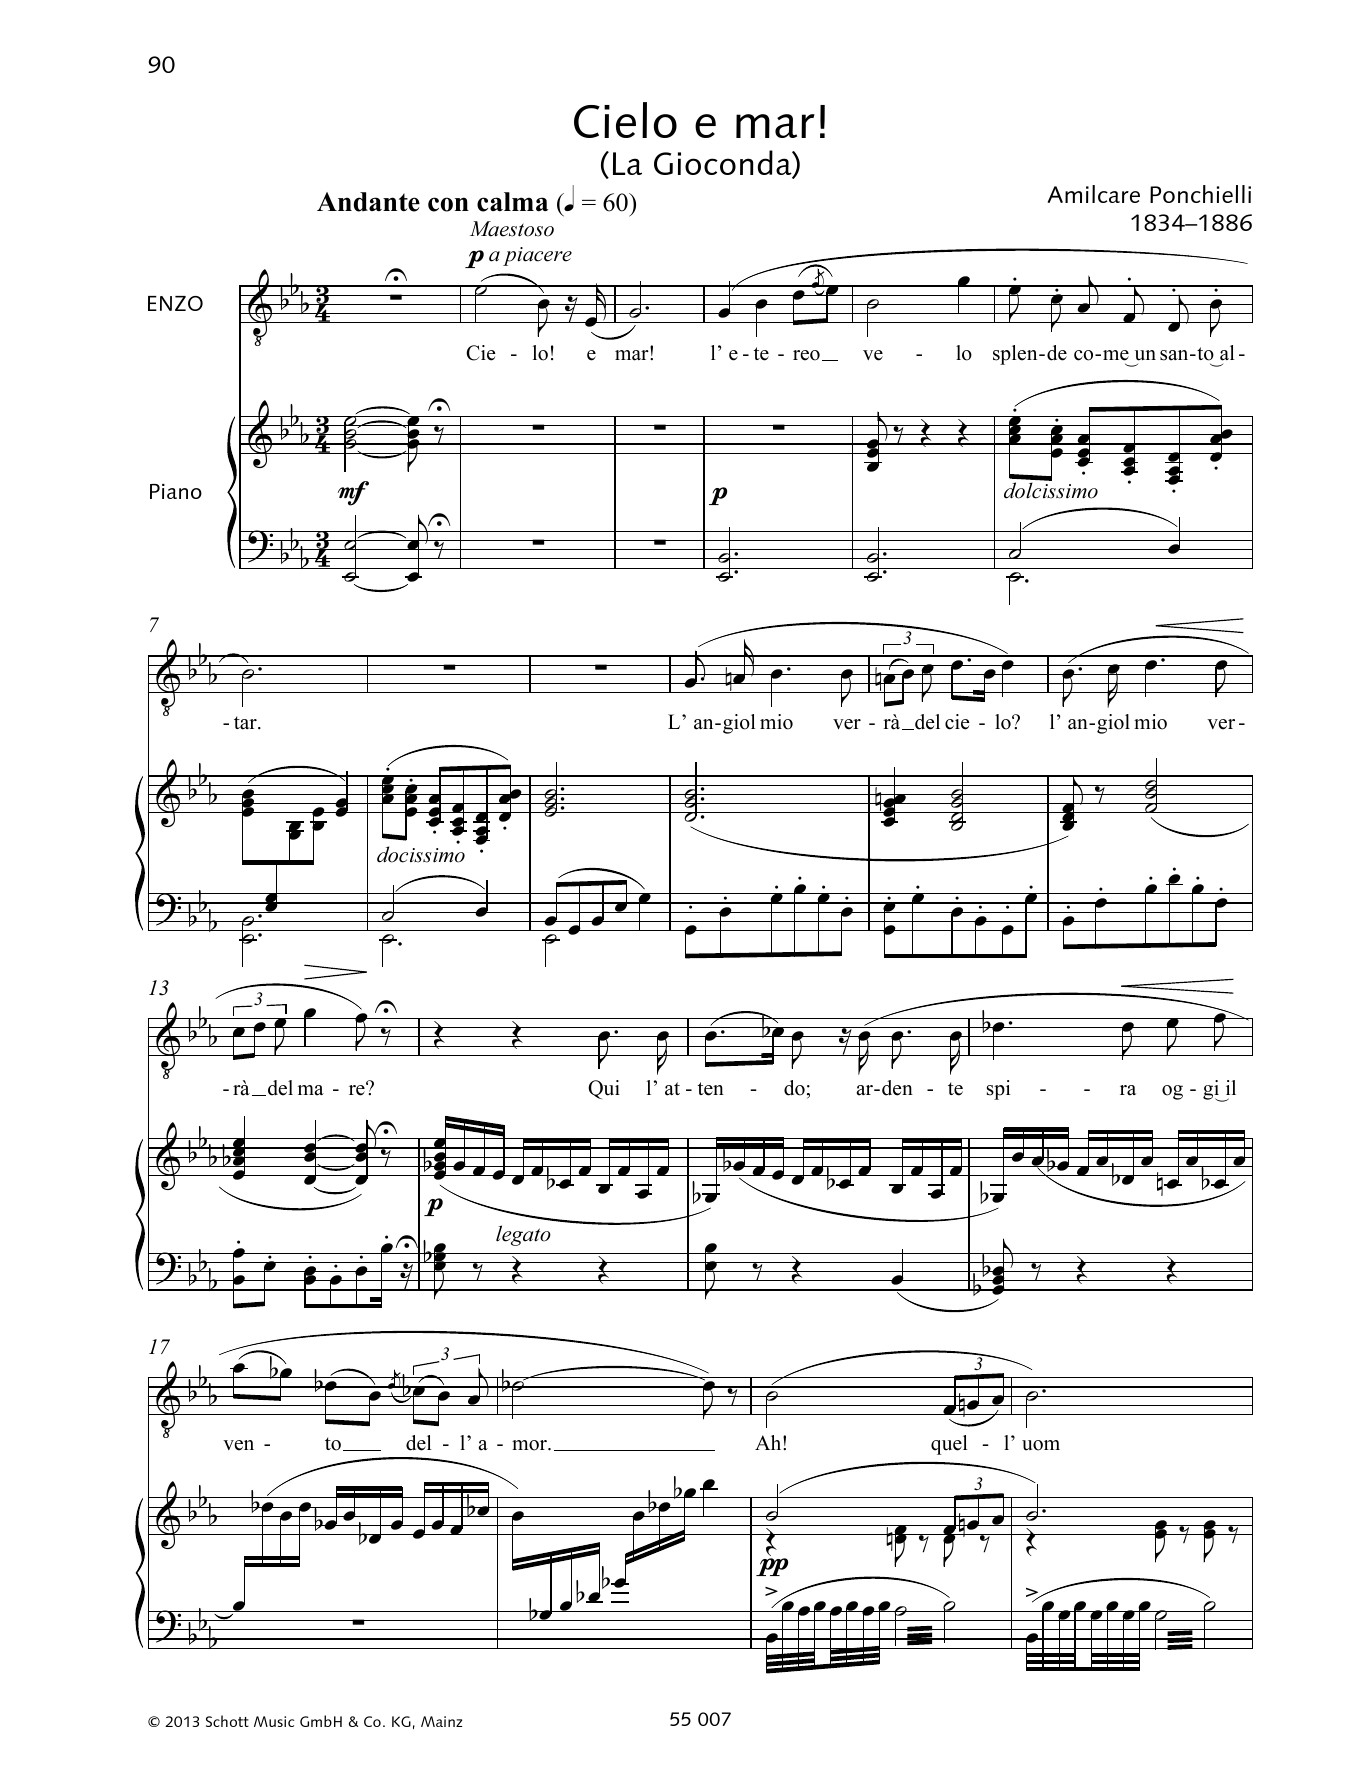 Francesca Licciarda Cielo e mar! Sheet Music Notes & Chords for Piano & Vocal - Download or Print PDF